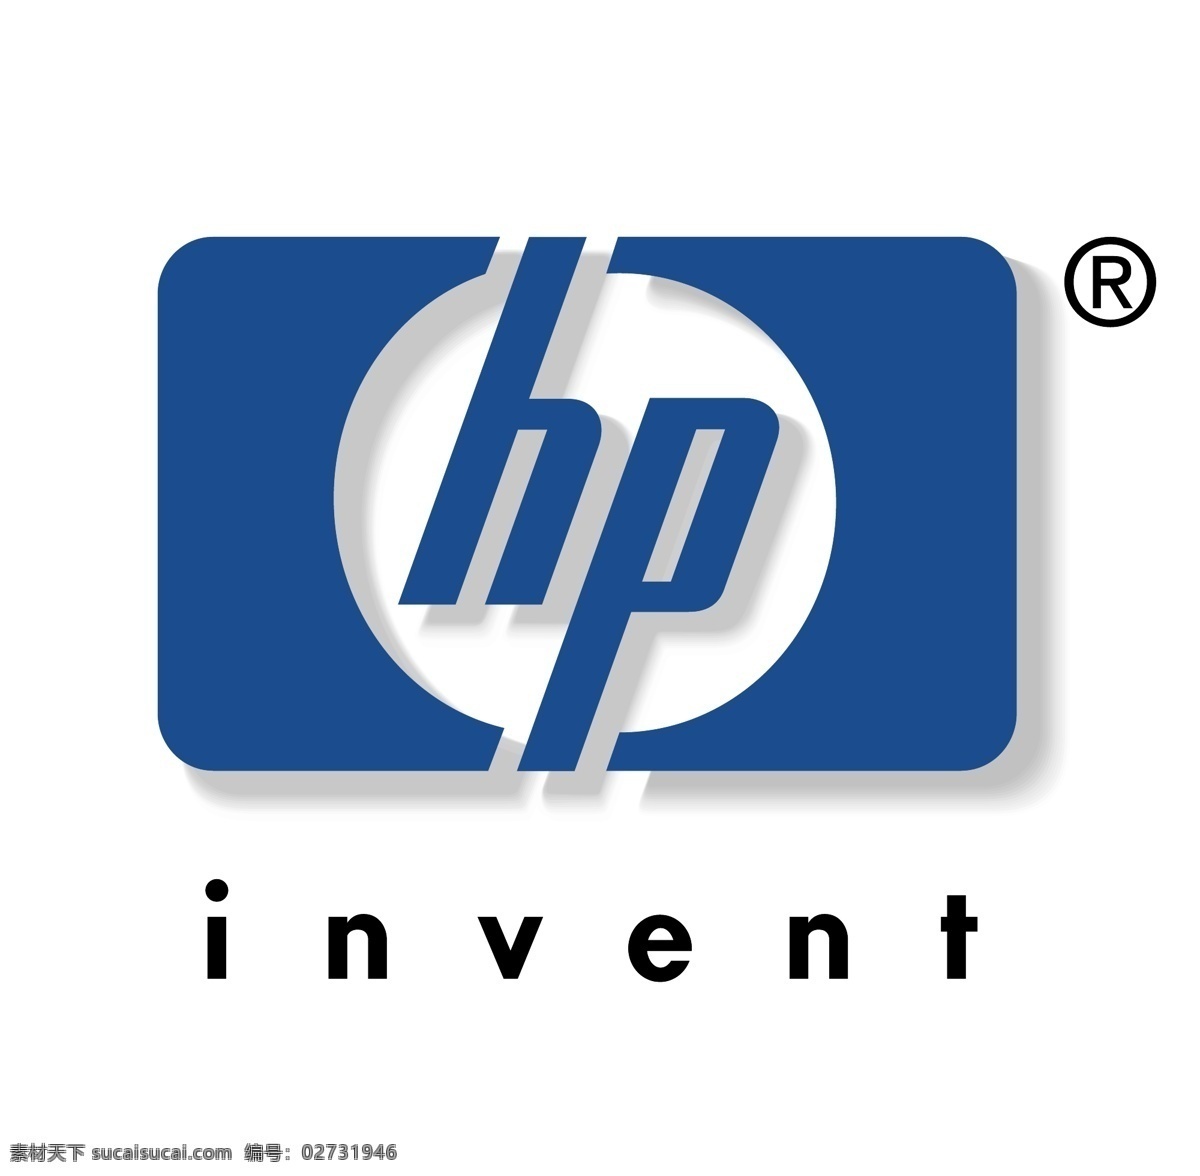 惠普 logo logo设计 蓝色 h p invent 矢量图